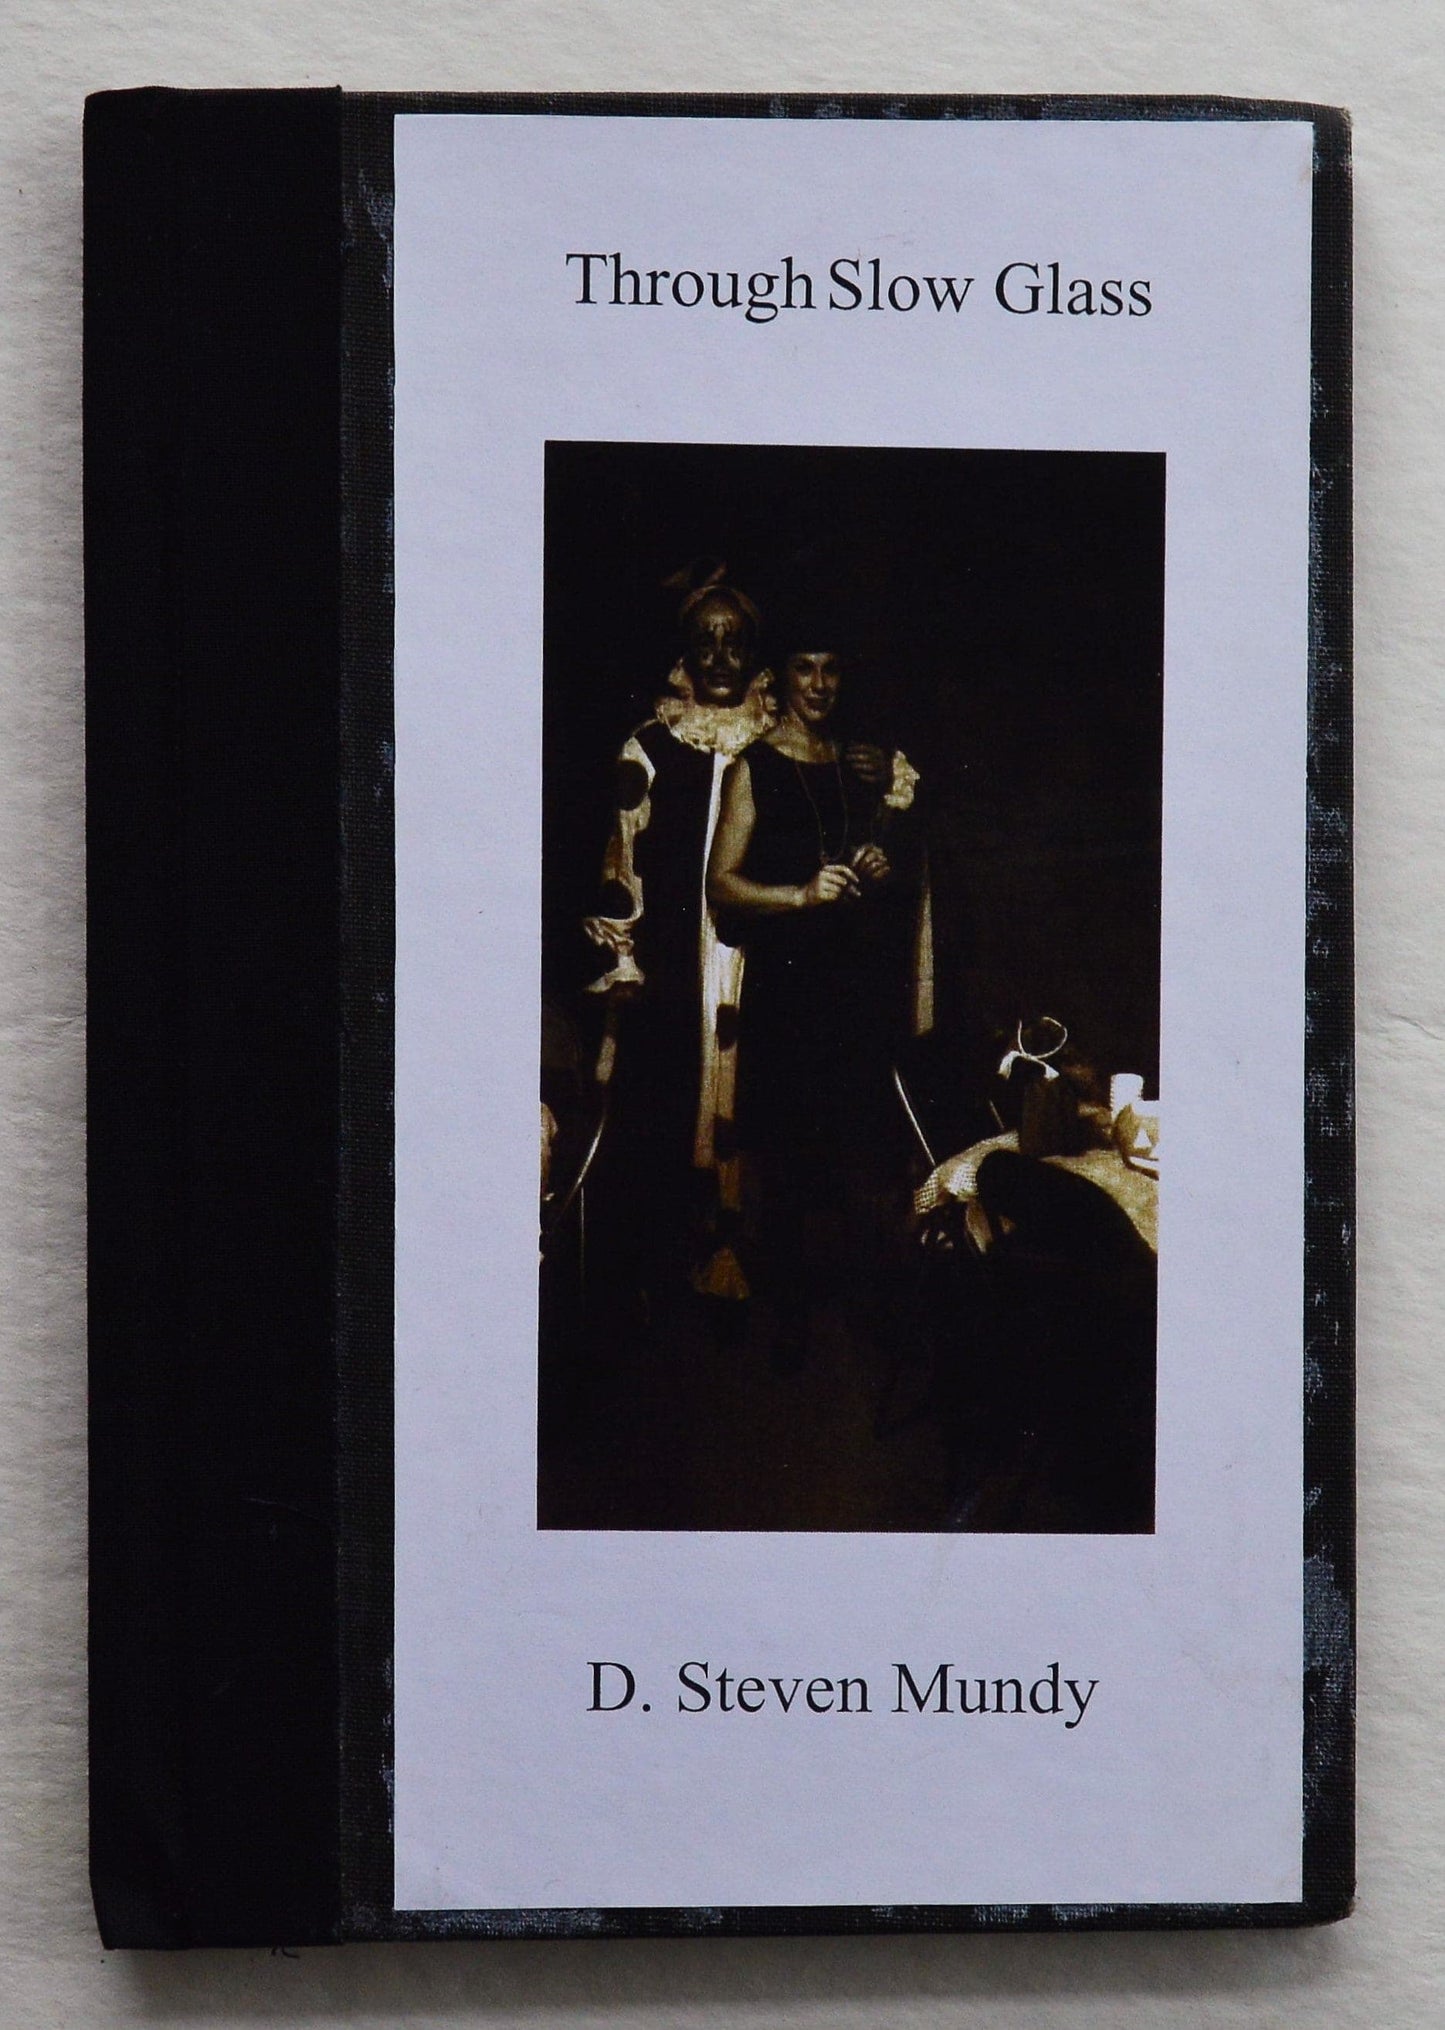 Through Slow Glass - D. Steven Mundy